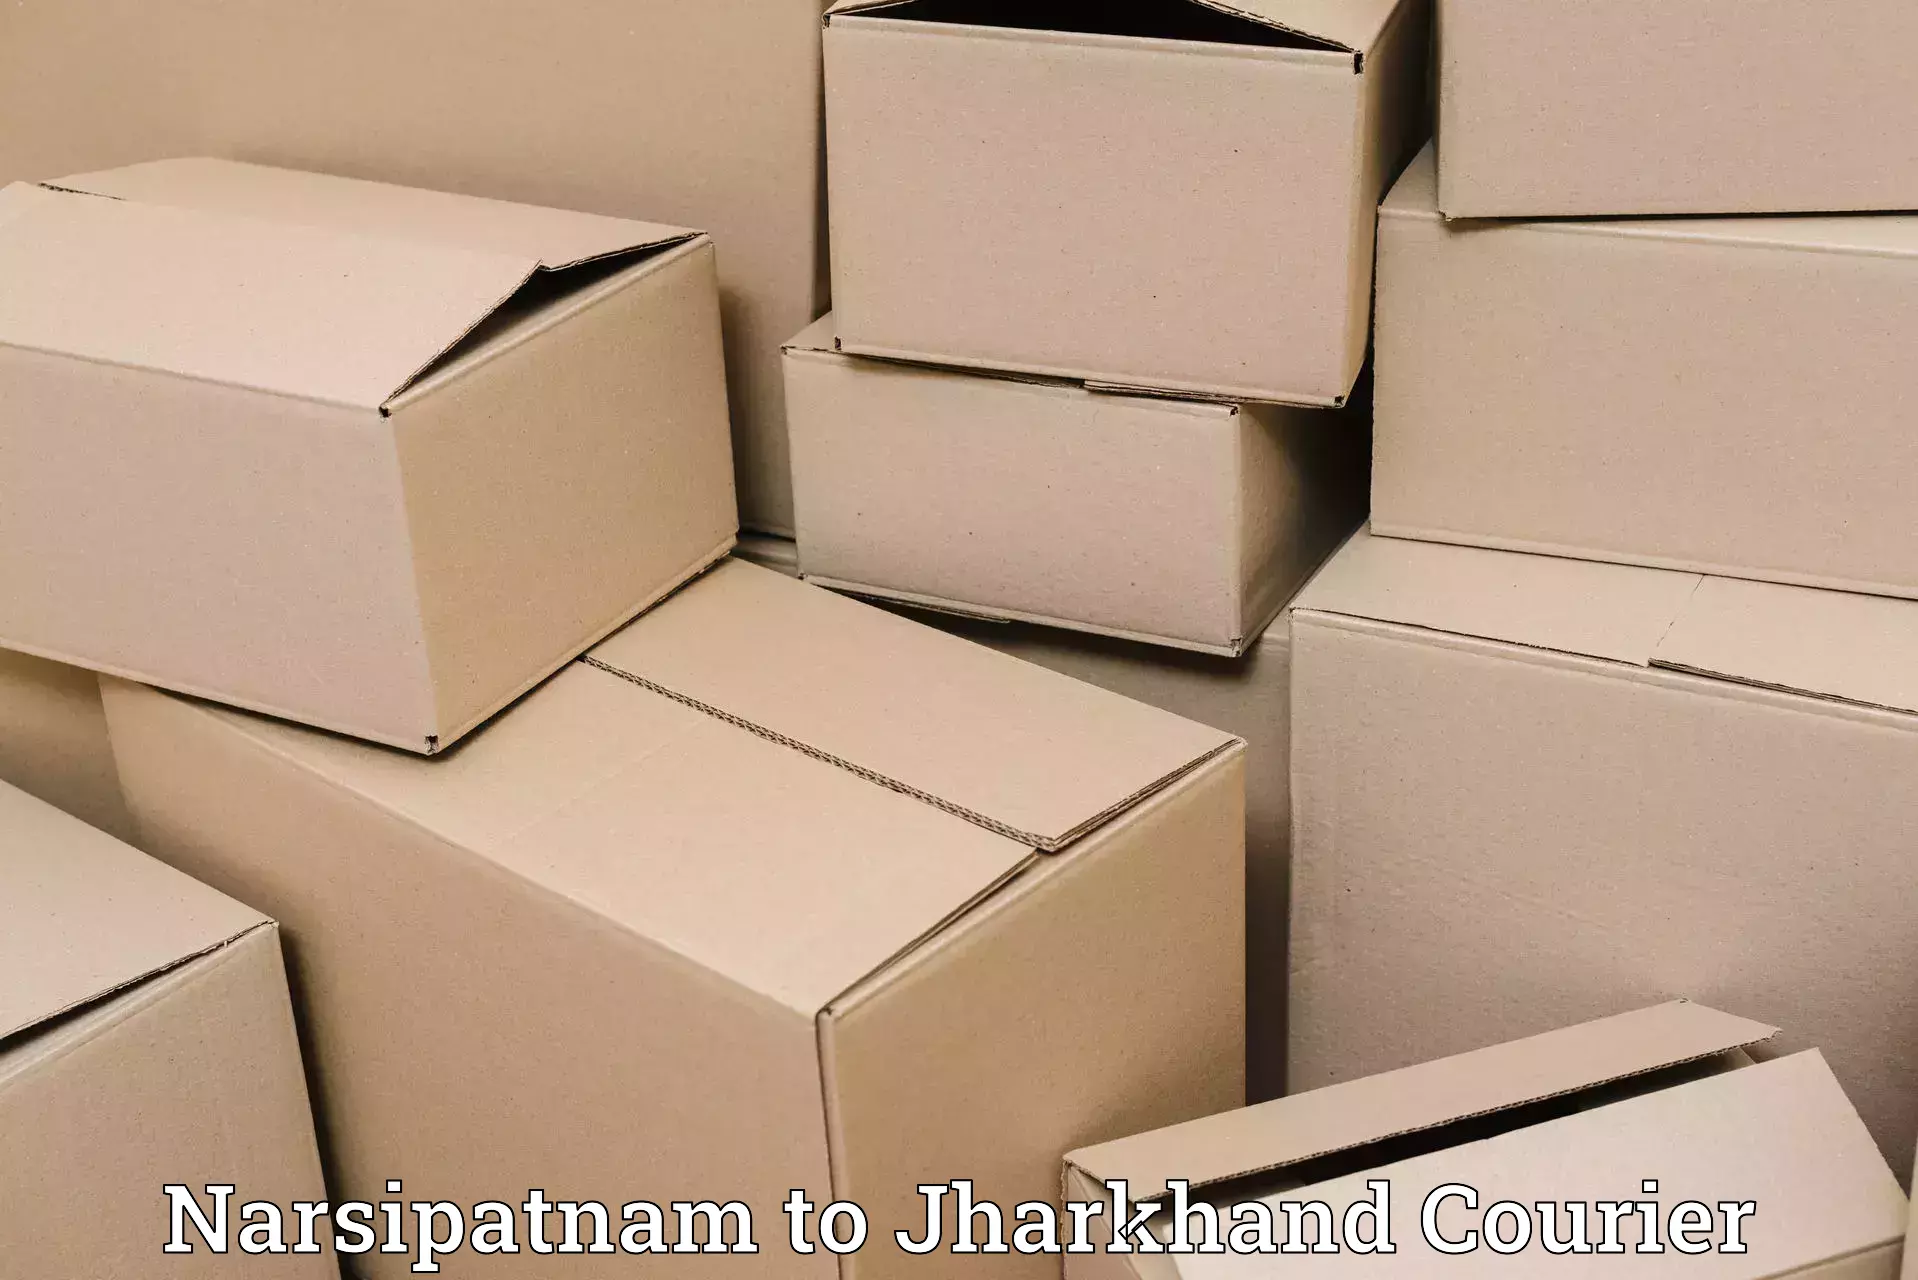 Professional courier handling Narsipatnam to Chatra